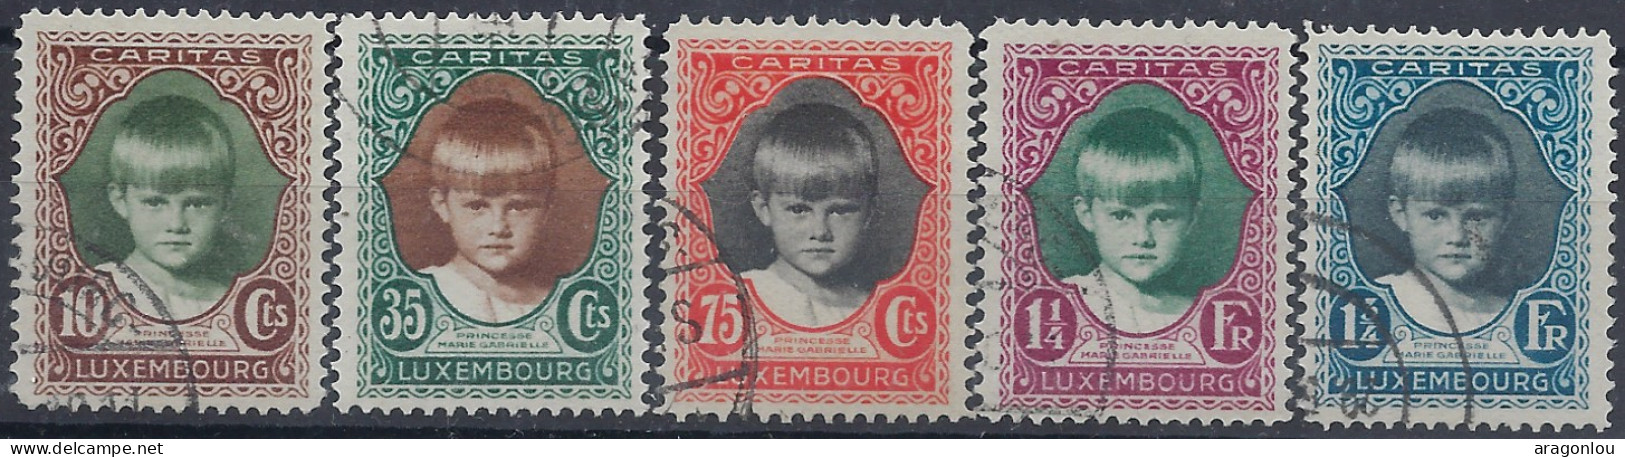 Luxembourg - Luxemburg - Timbres - 1929   Caritas   Princesse Marie-Gabrielle   Série   ° - Blocchi & Foglietti